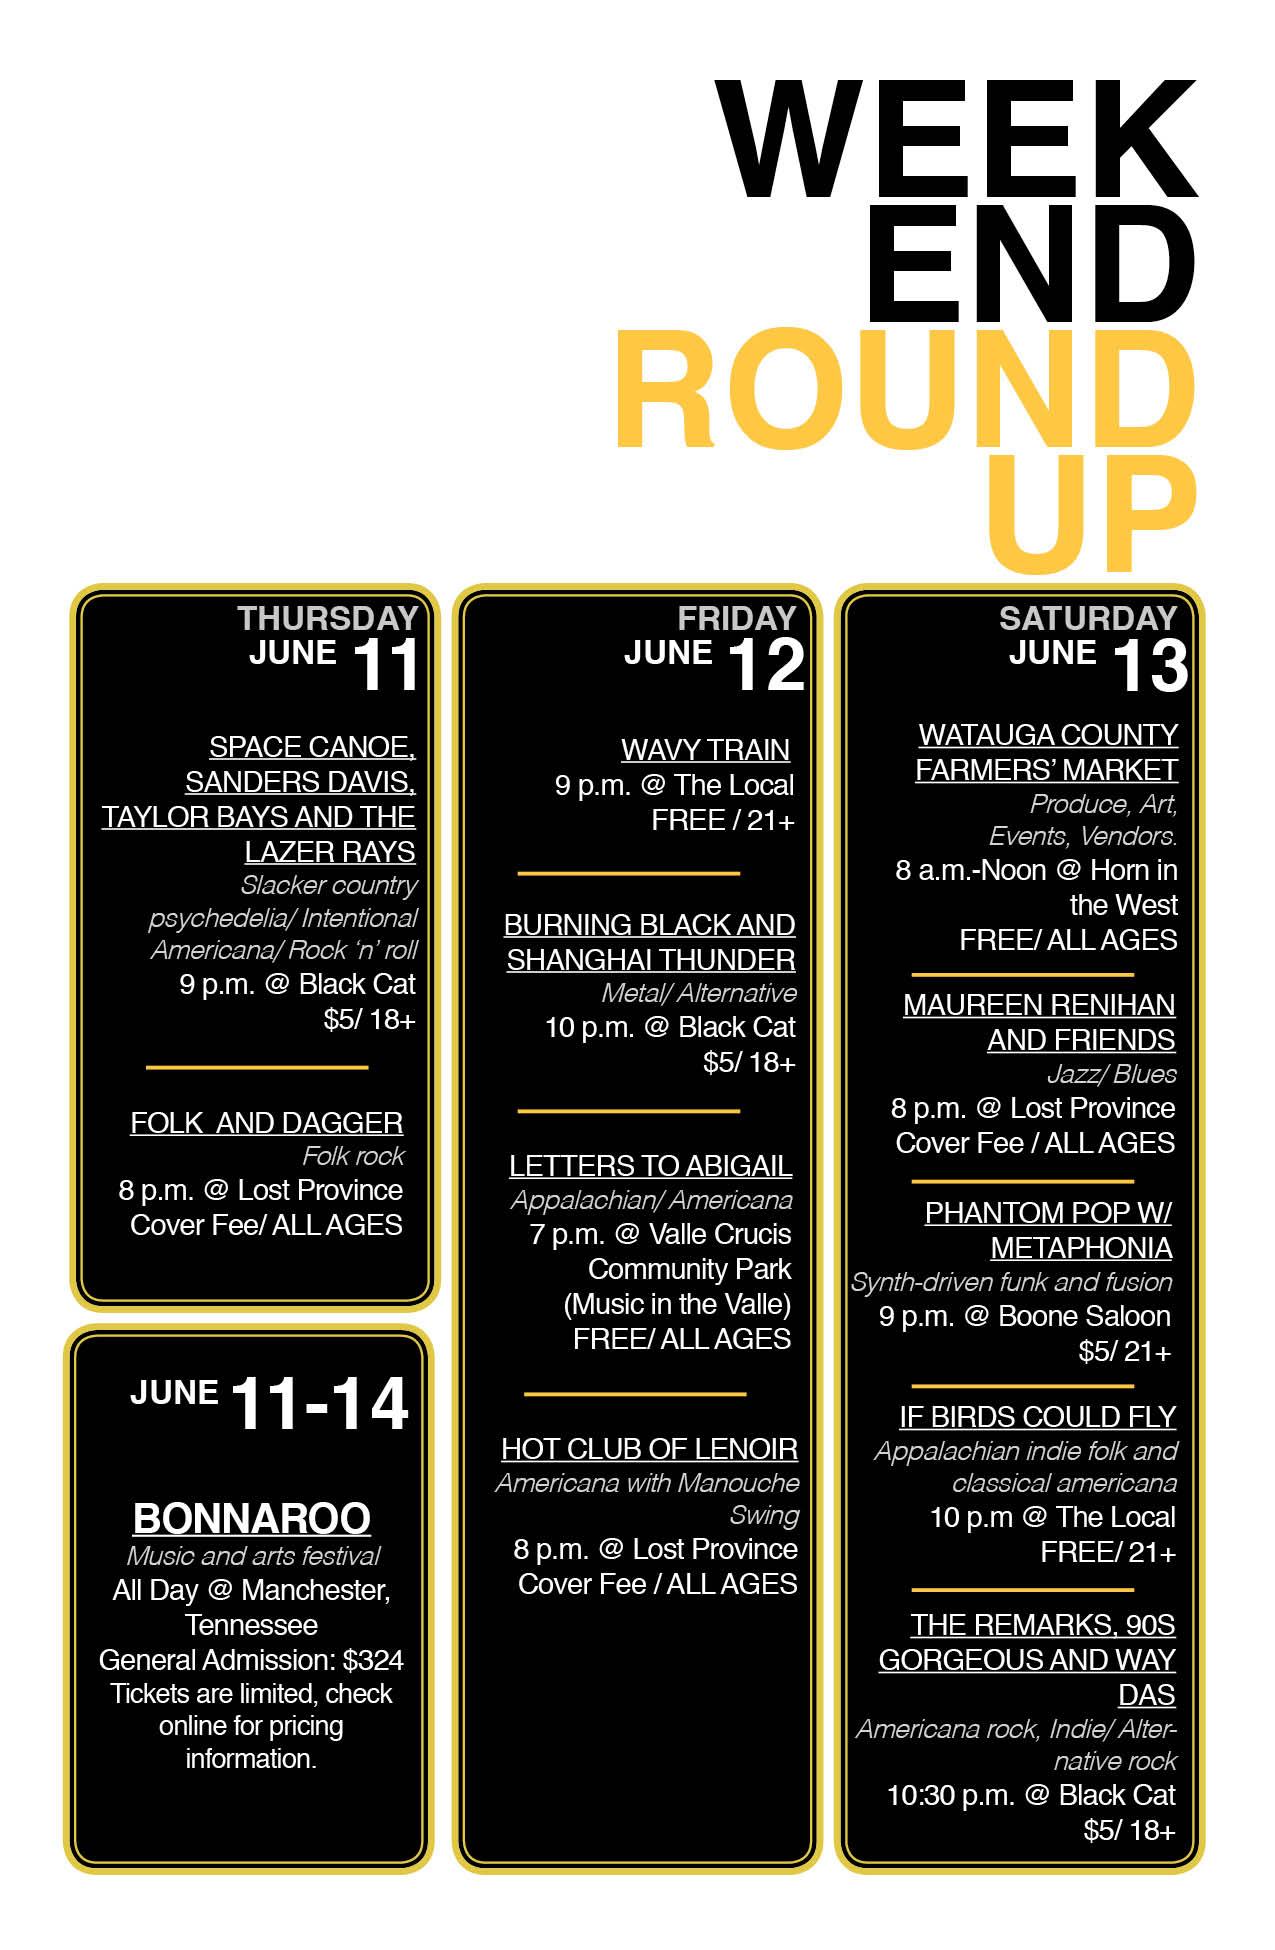 Weekend Roundup: June 11-14